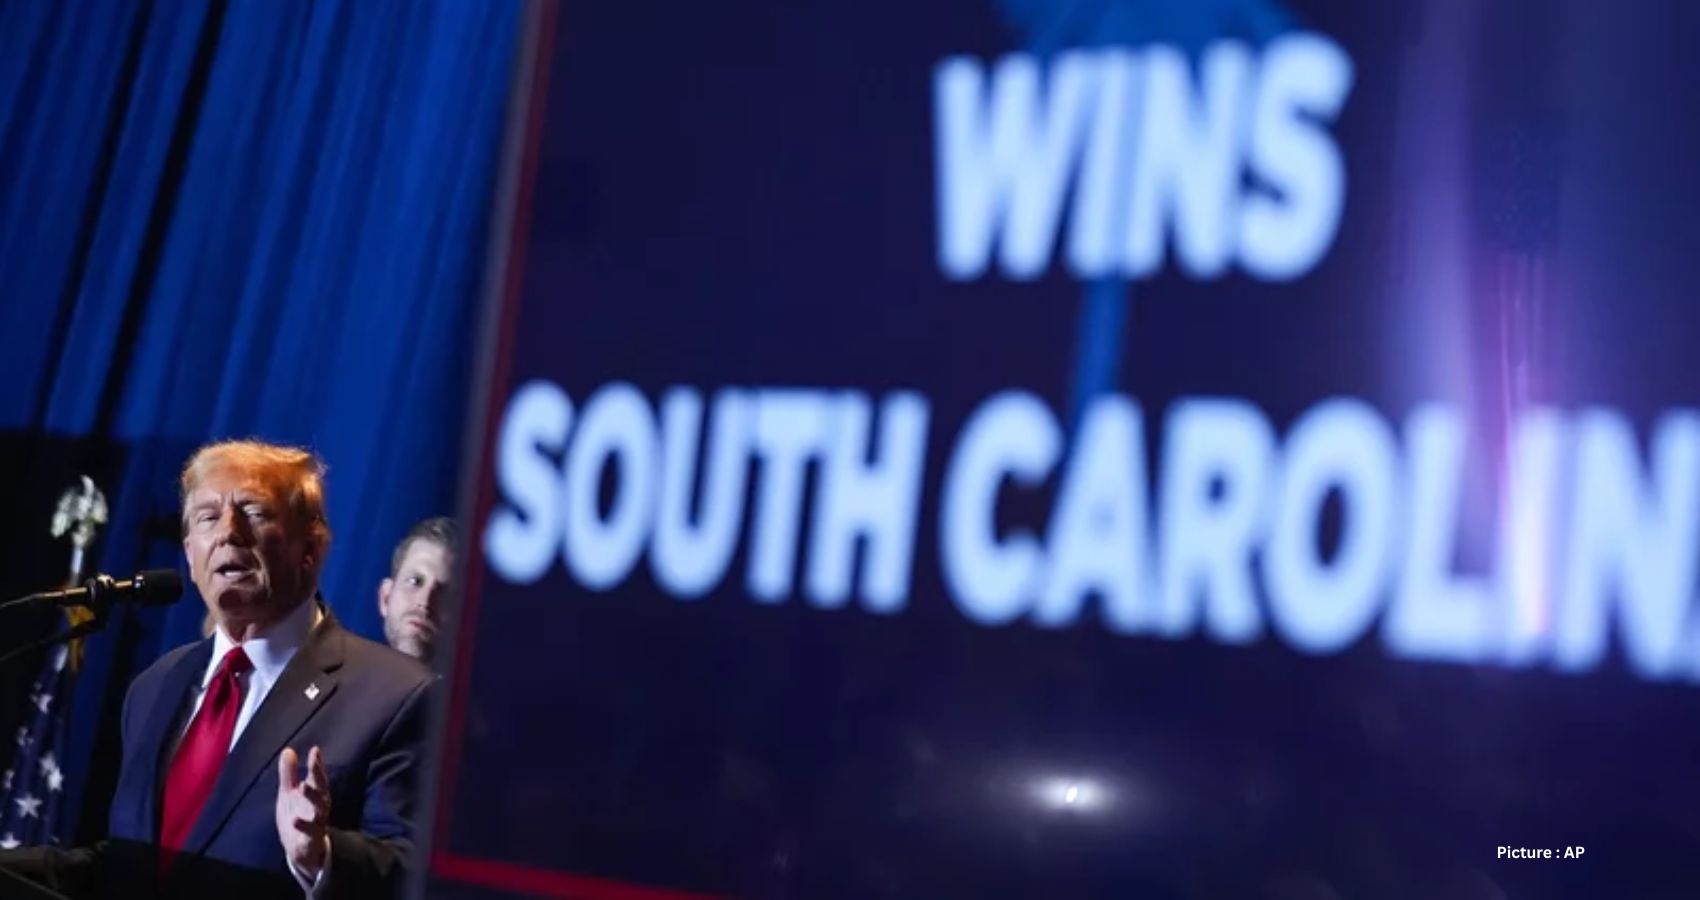 Trump Triumphs in South Carolina Primary, Haley Vows to Persist in Republican Race